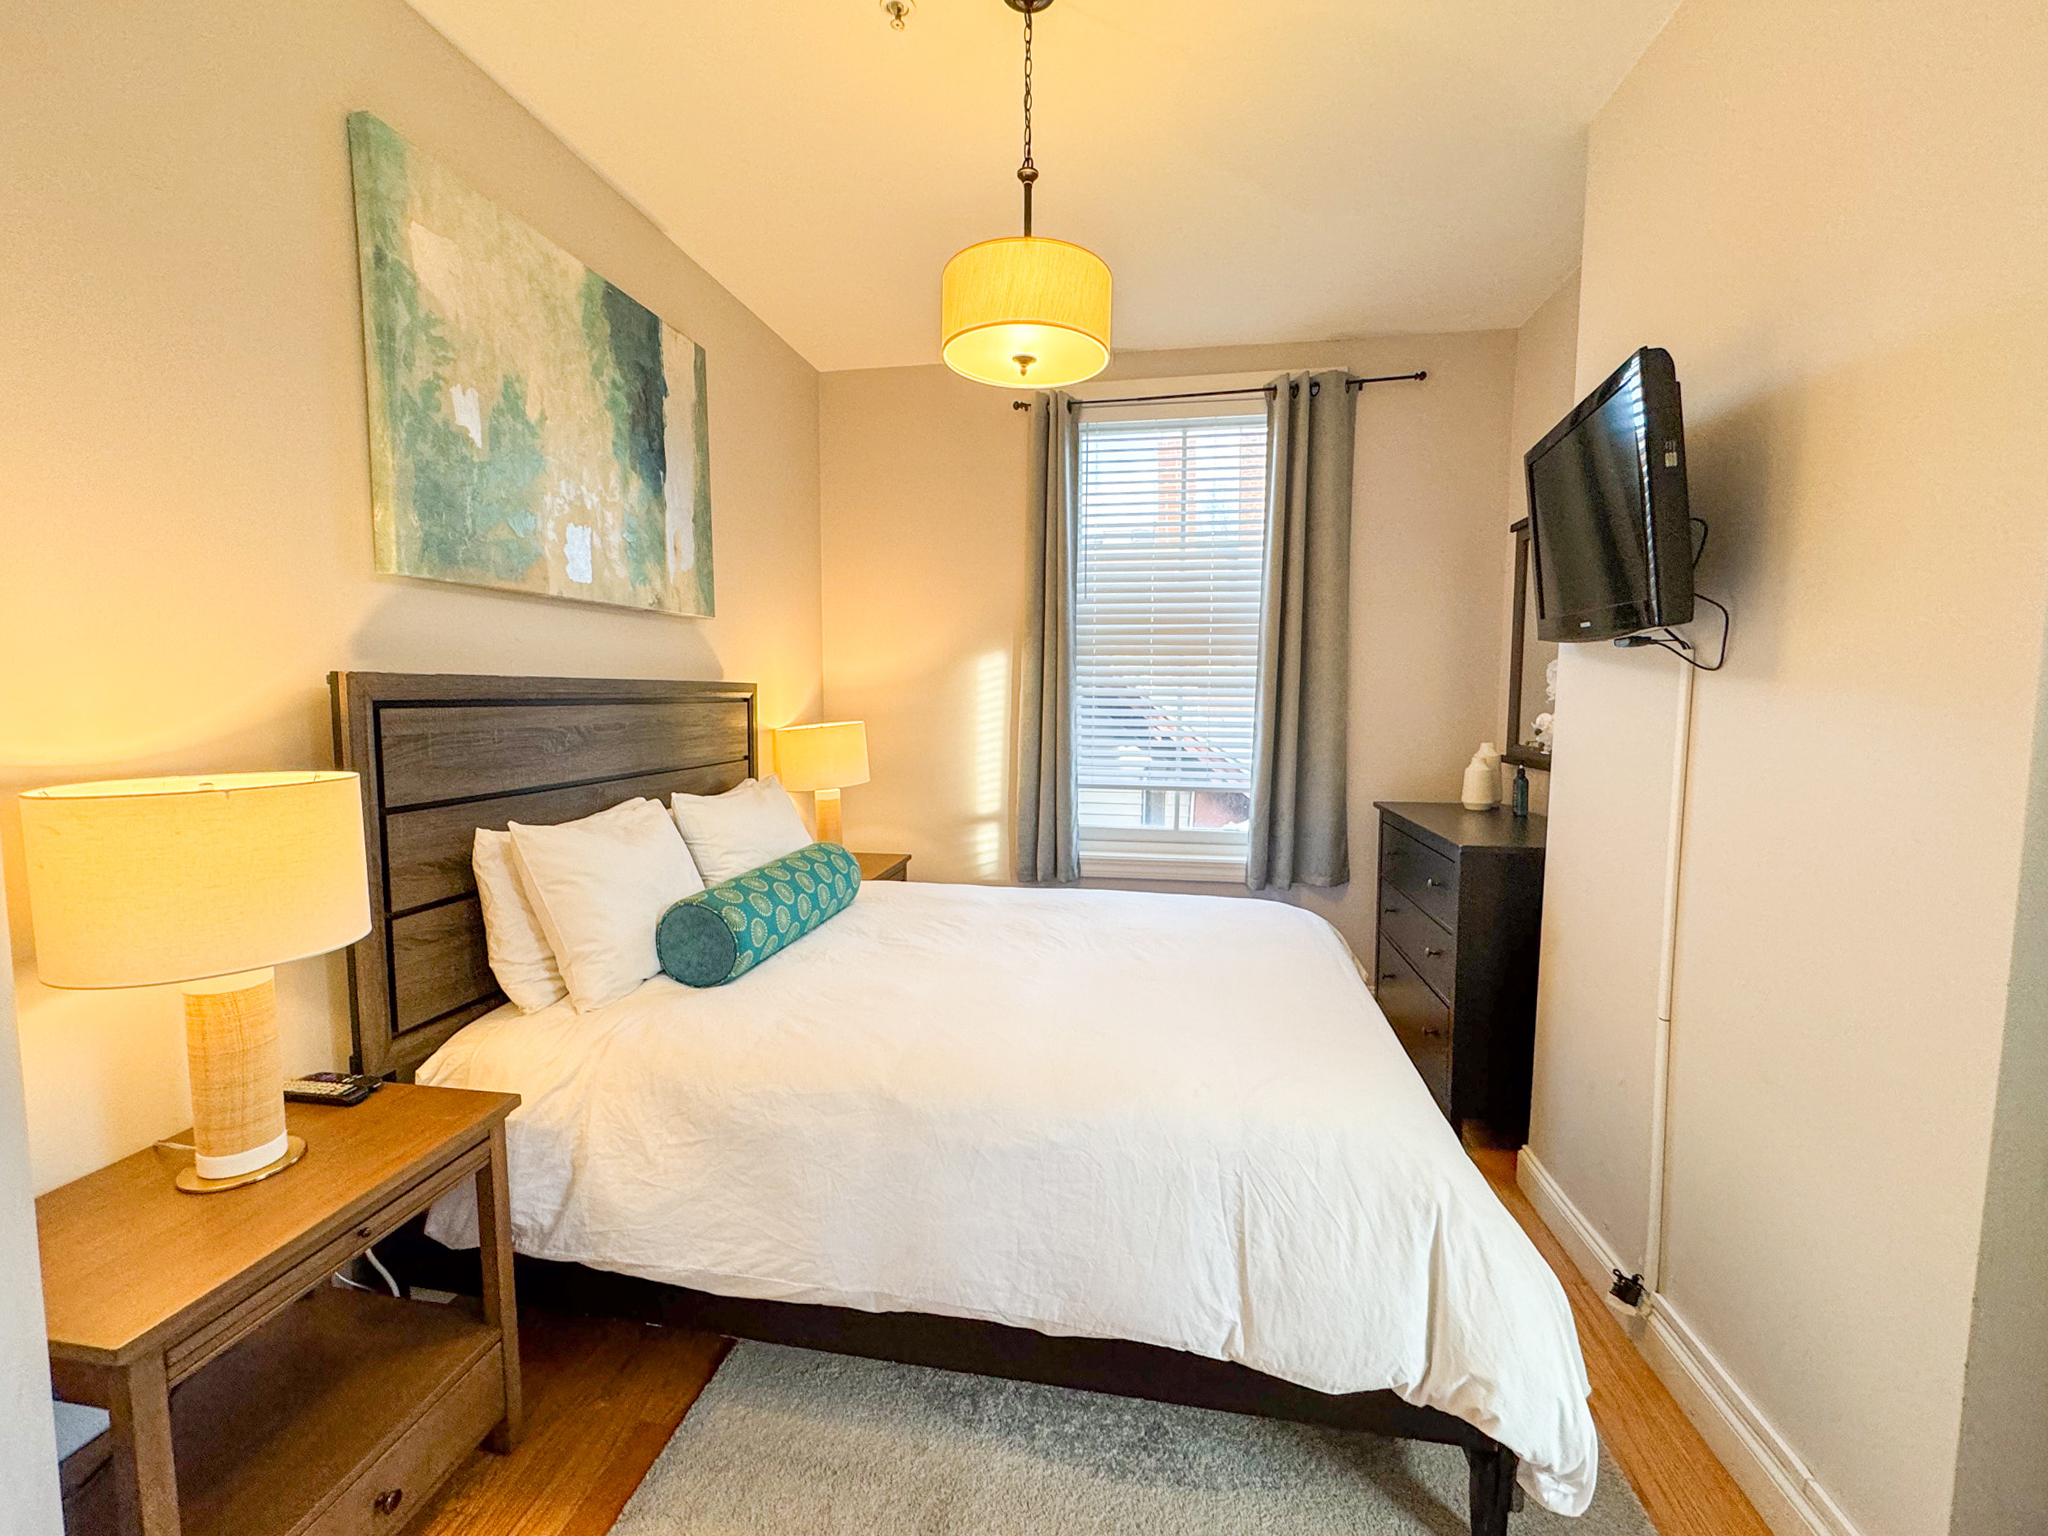 Photos of apartment on Harvard Sq.,Brookline MA 02445